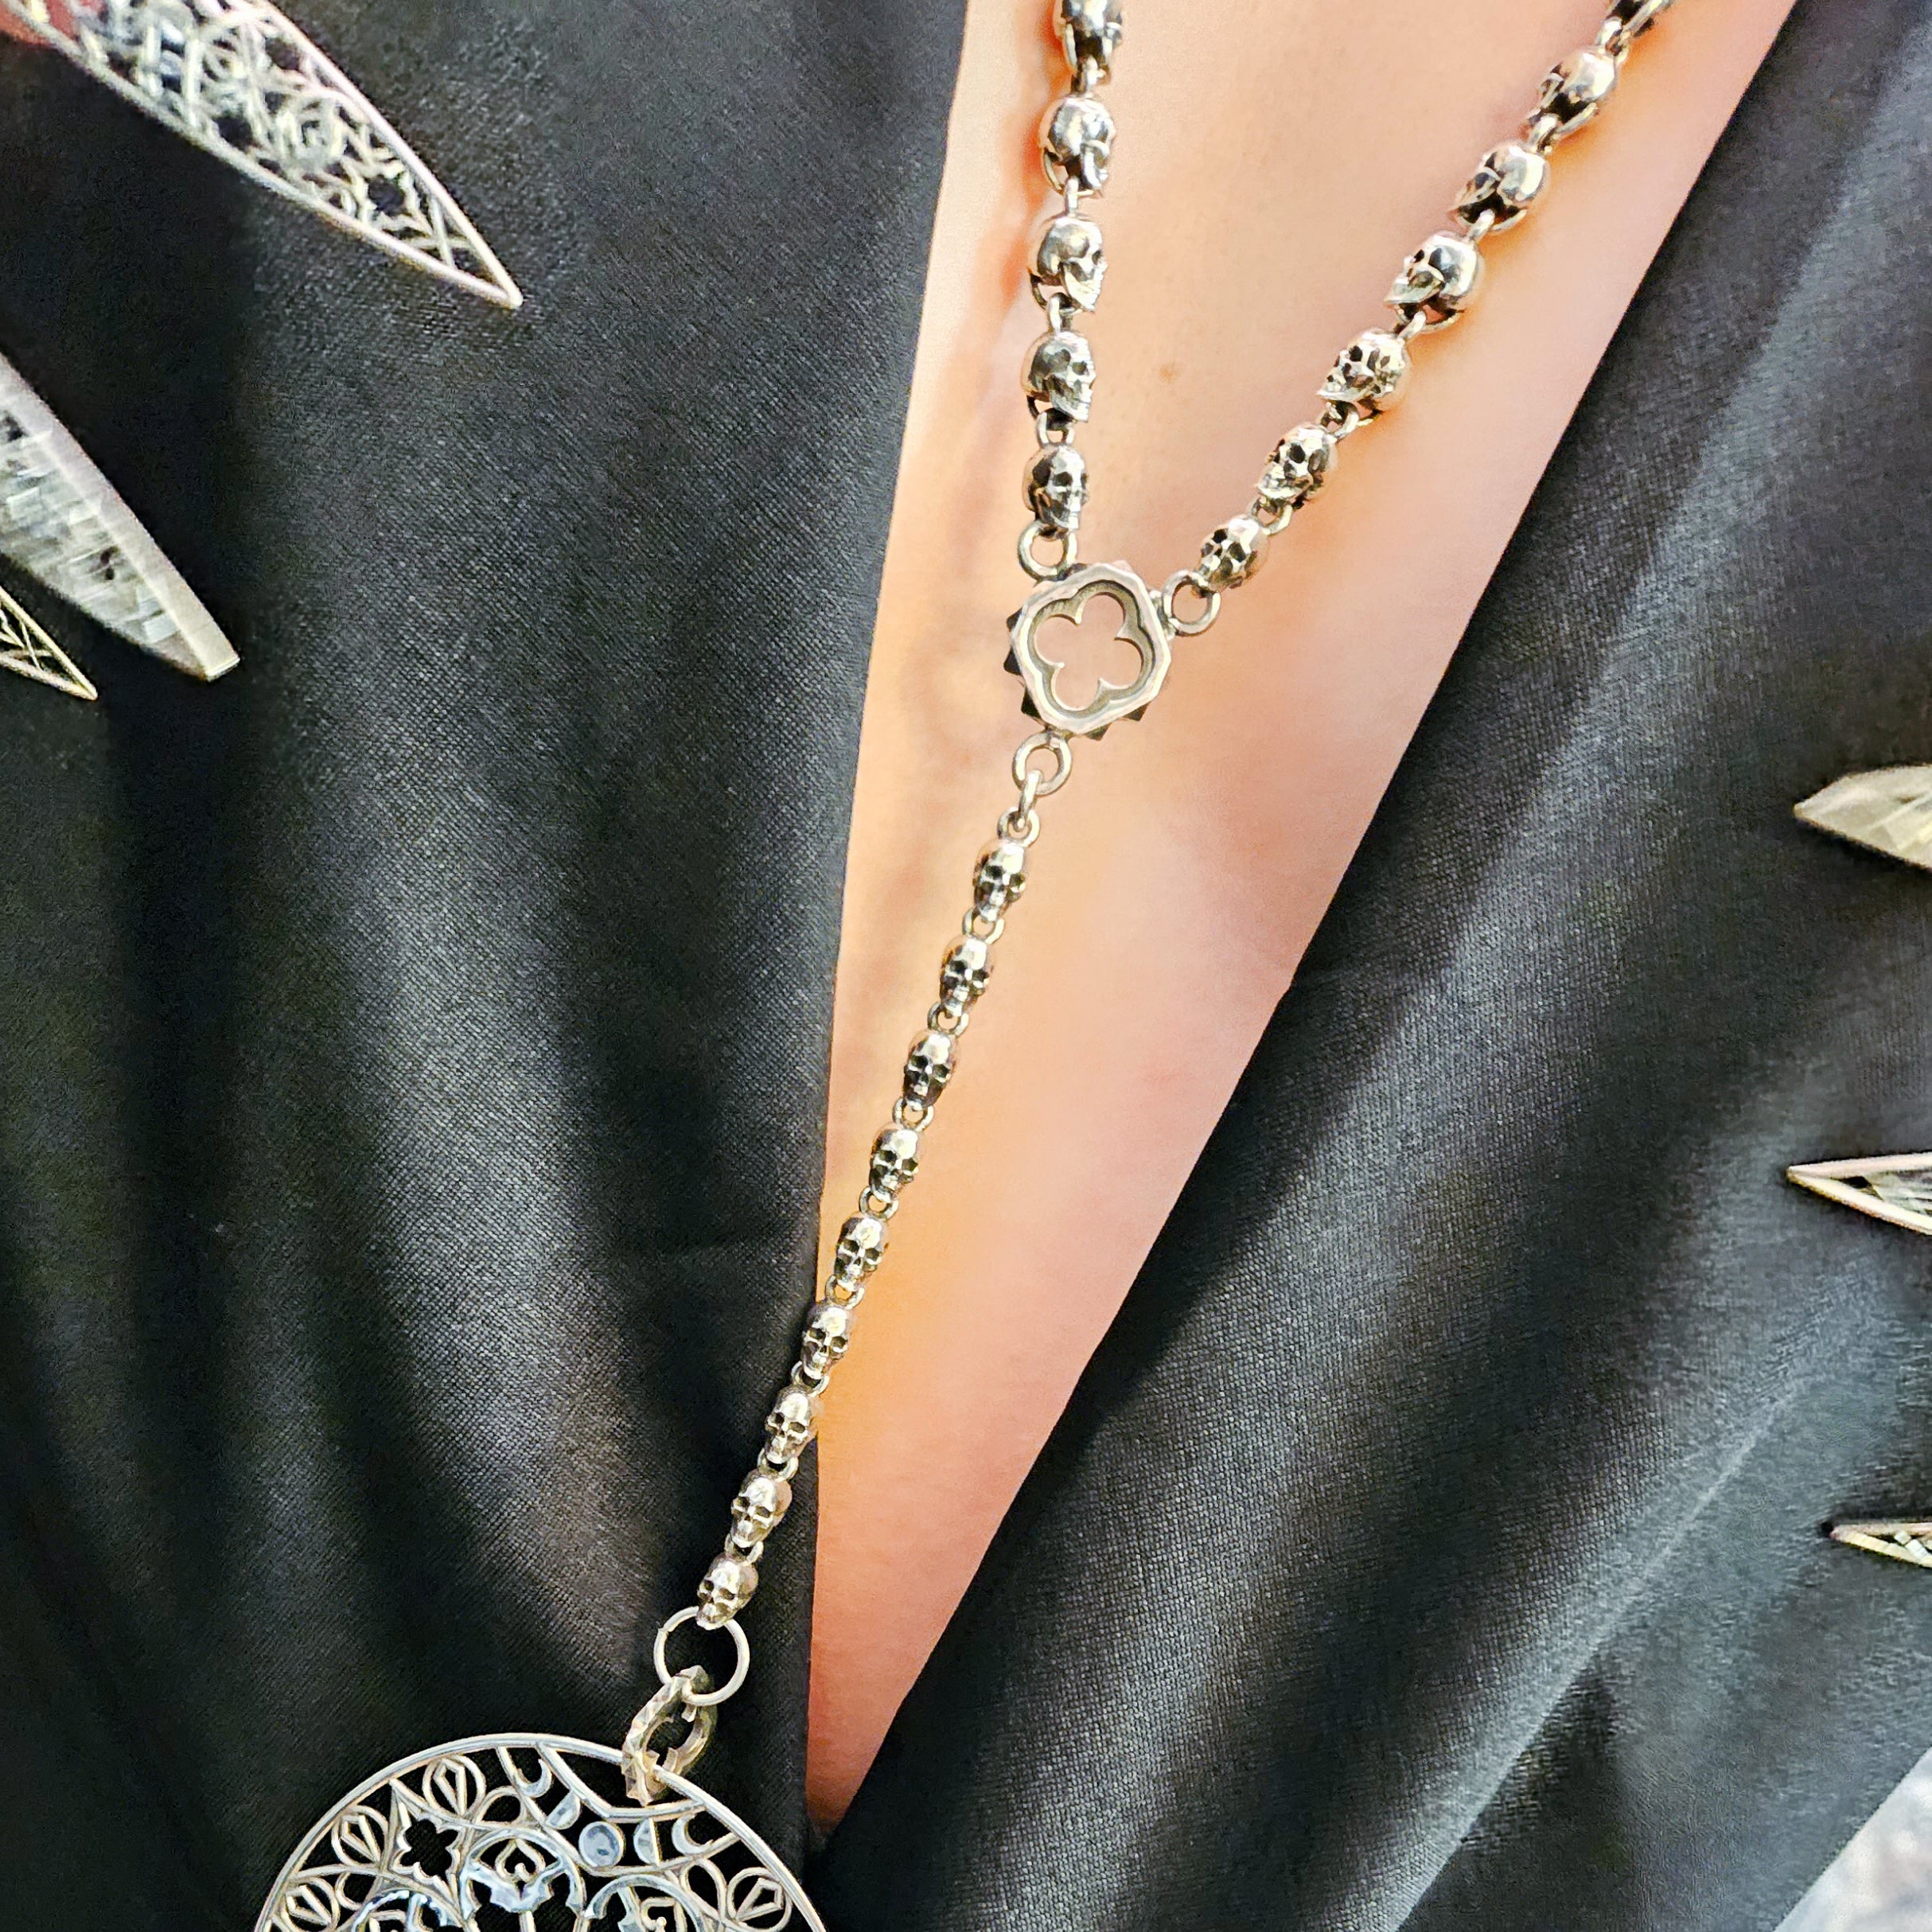 Heavy Skull Rosary Necklace - Pendant Selection